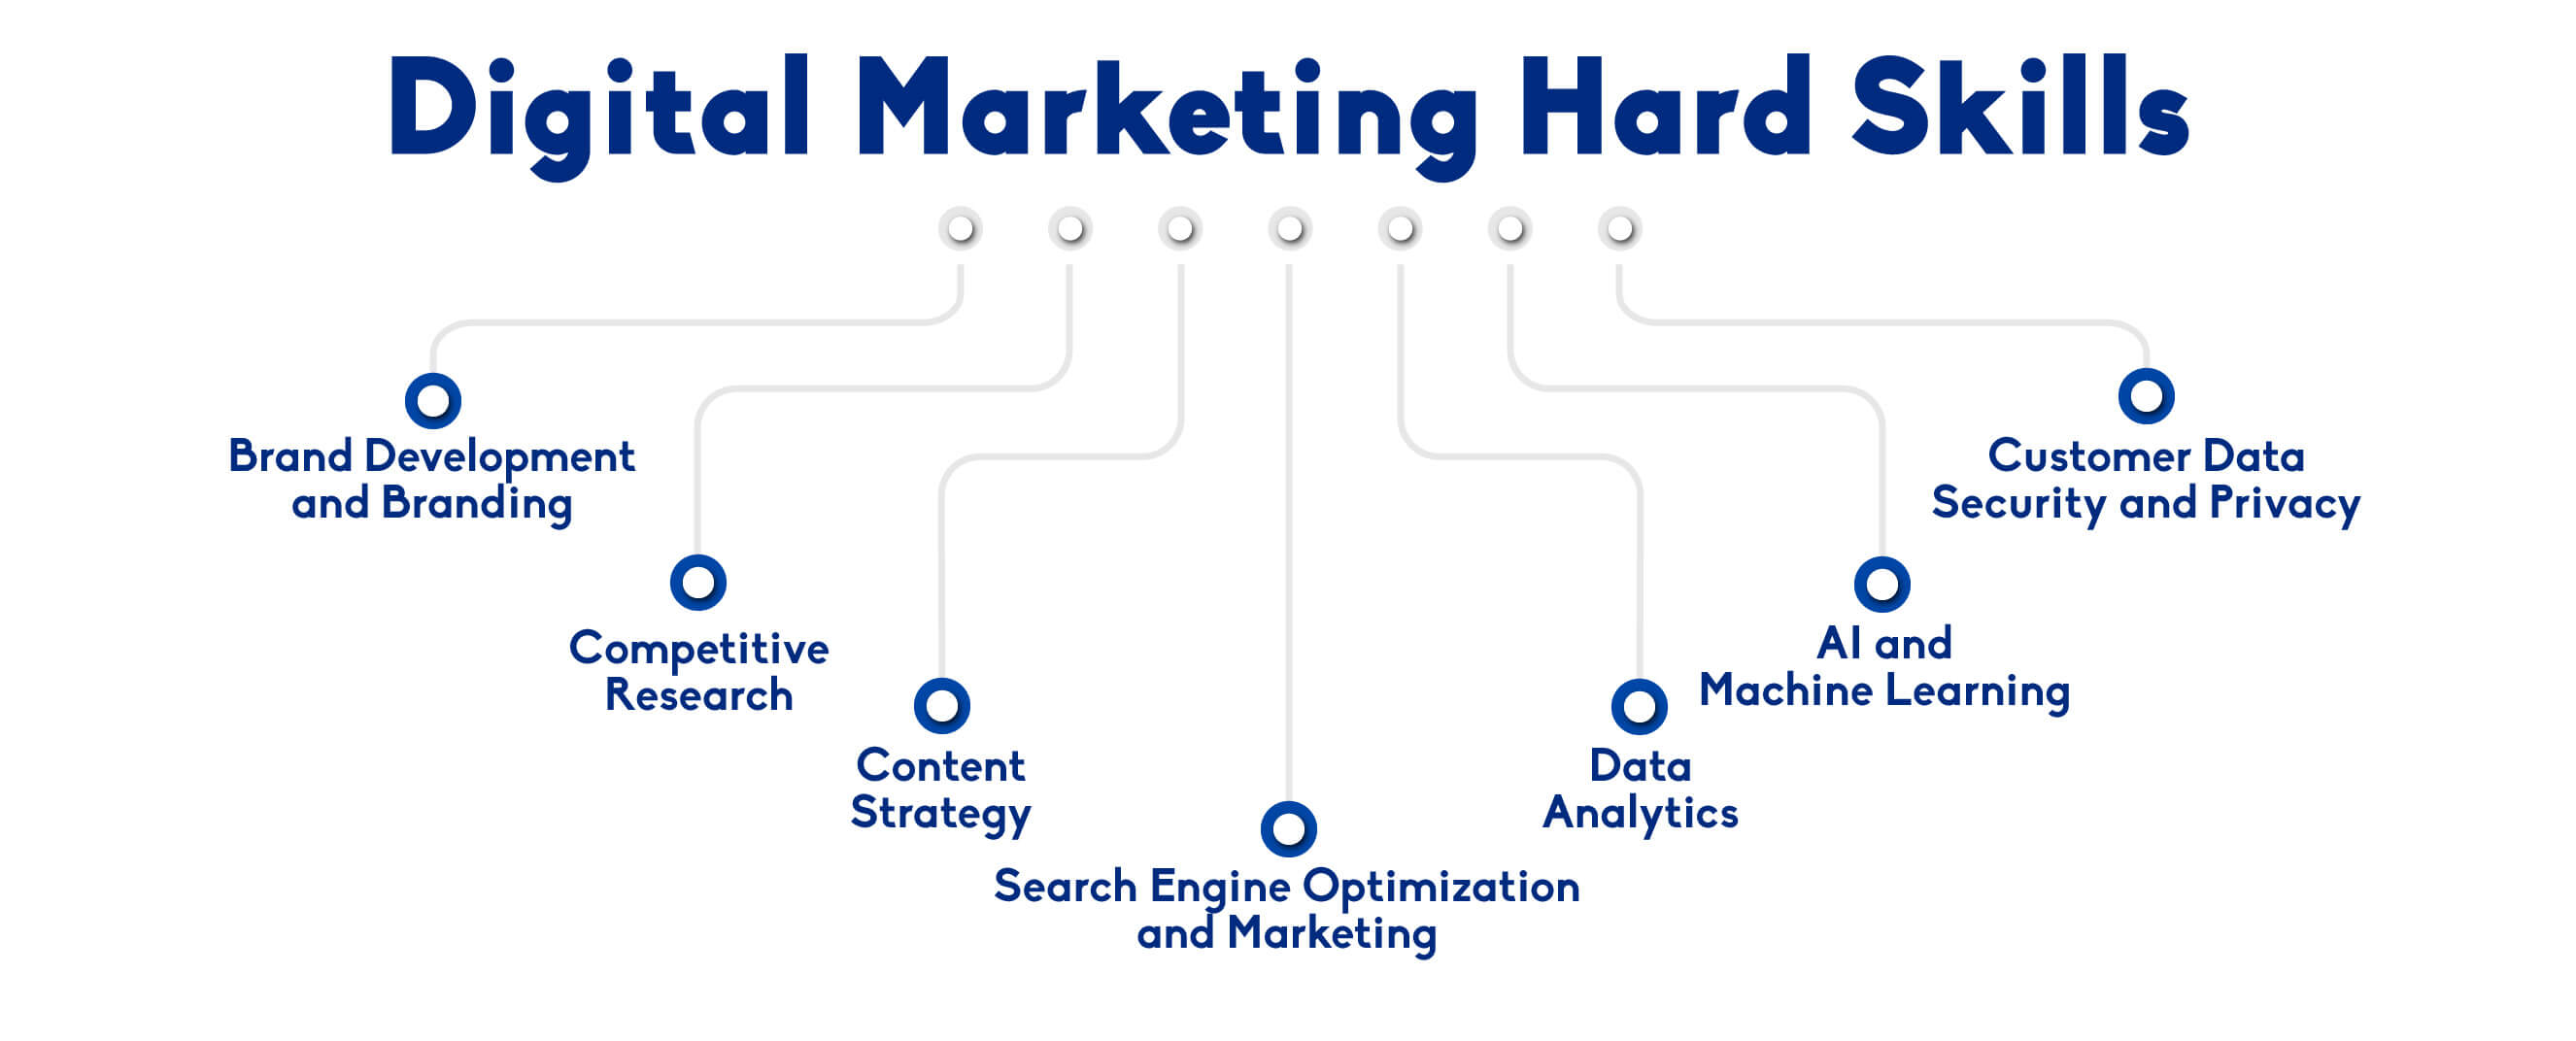 The most important hard skills for digital marketing